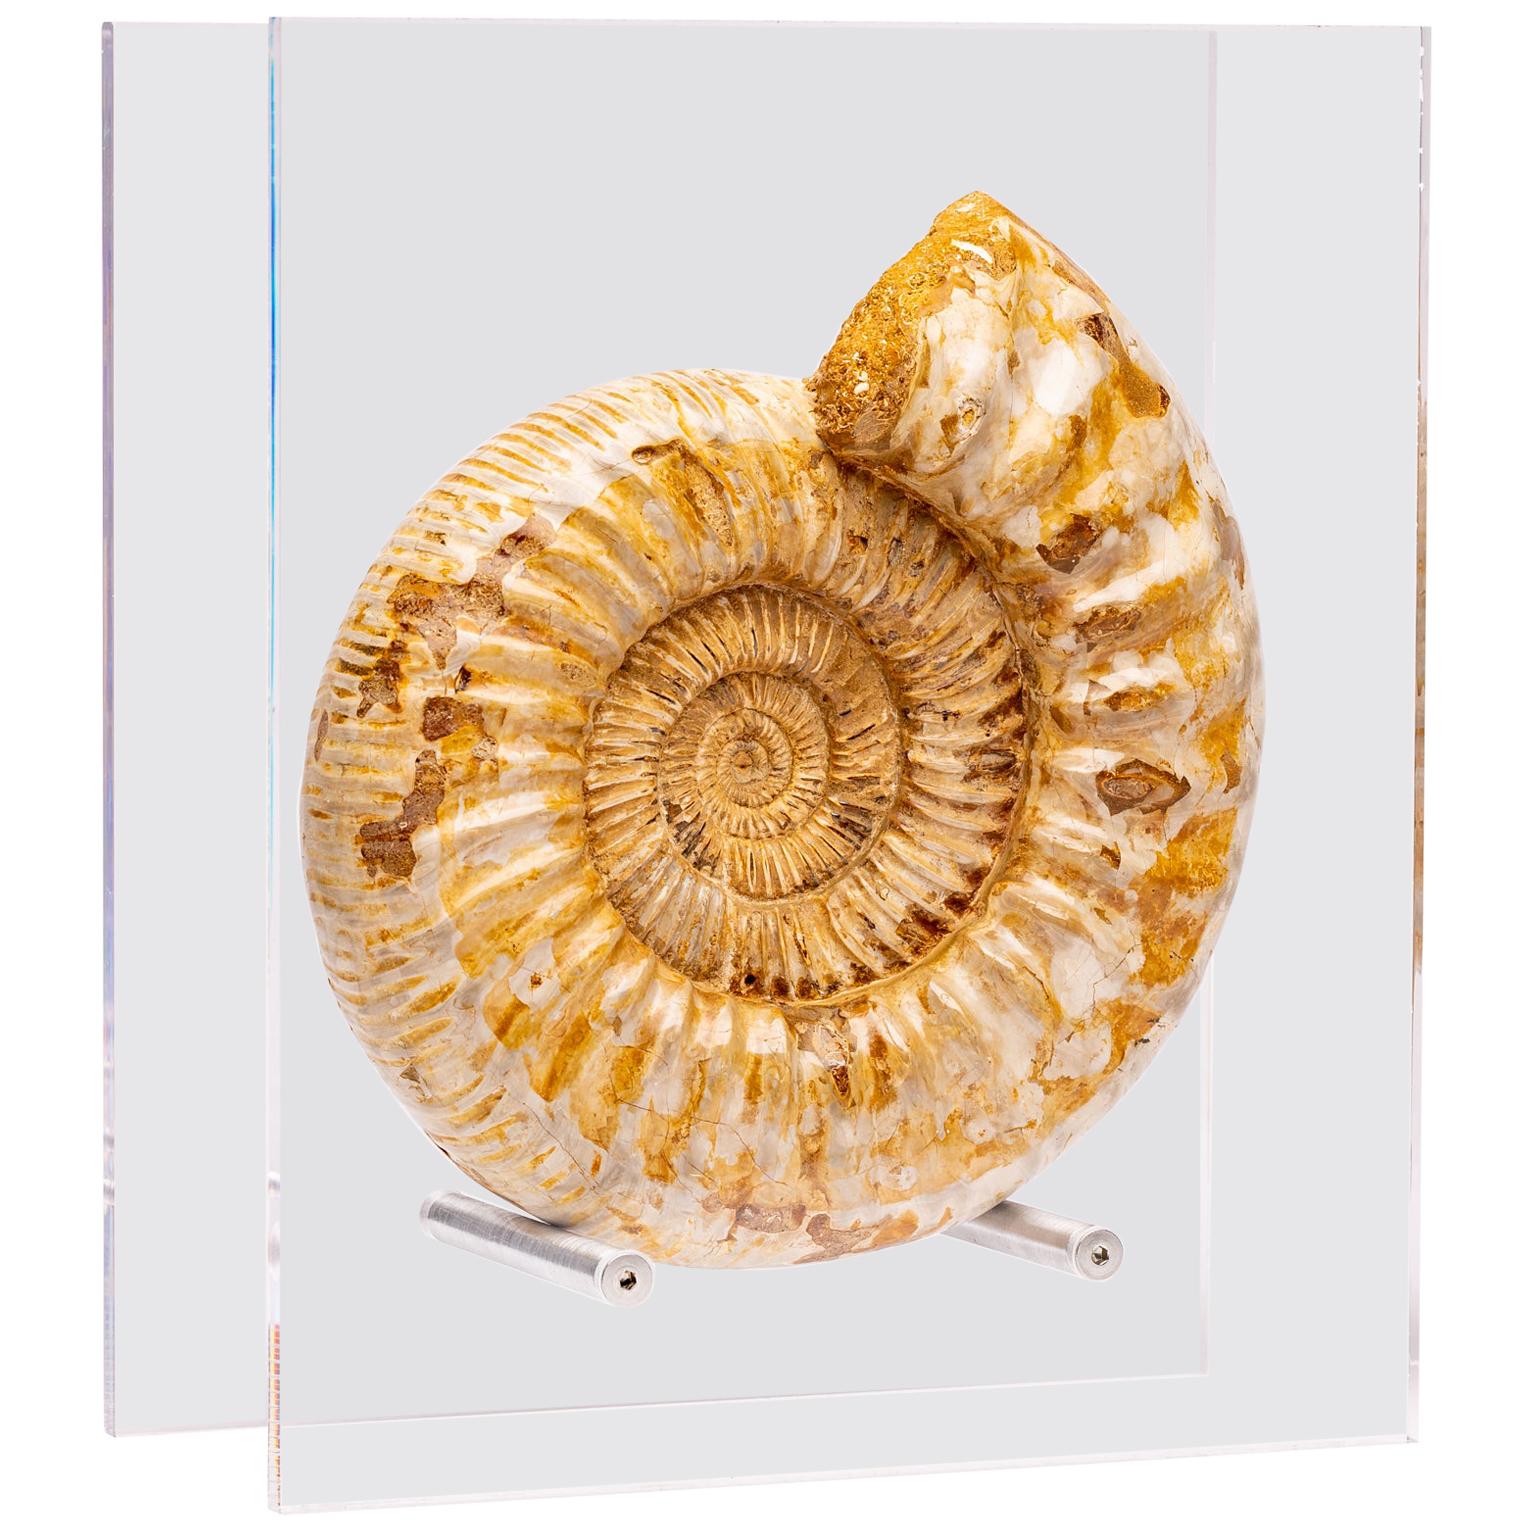 Madagascar Perisphinctes Fossil Ammonite on Acrylic Stand, Jurassic Period